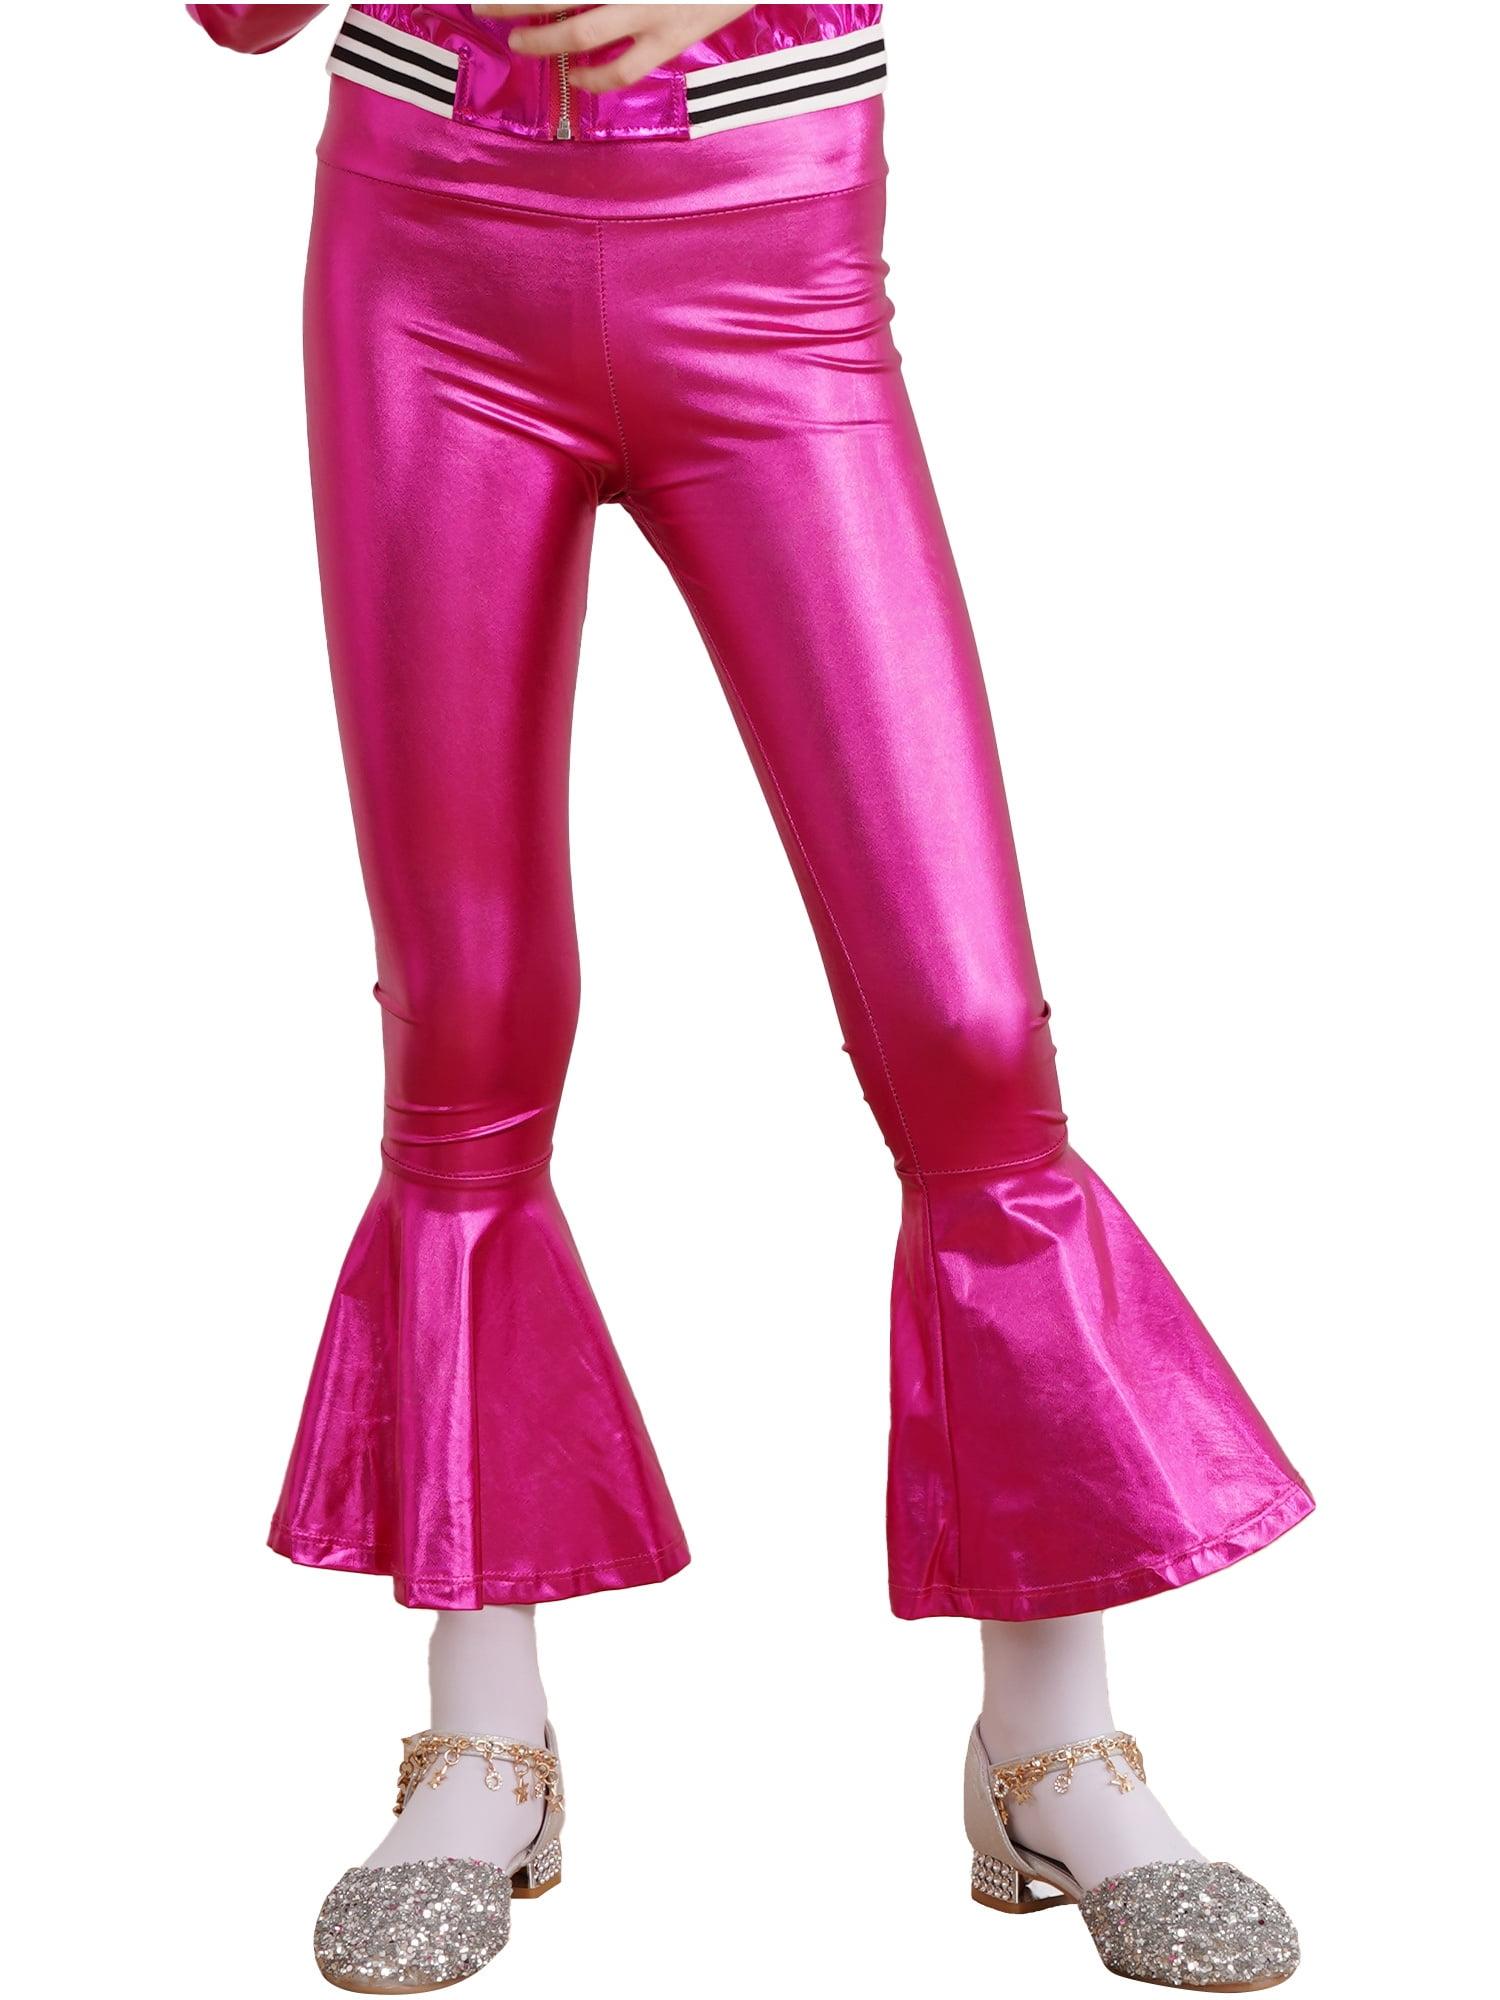 High Waisted Pink Dance Pants.